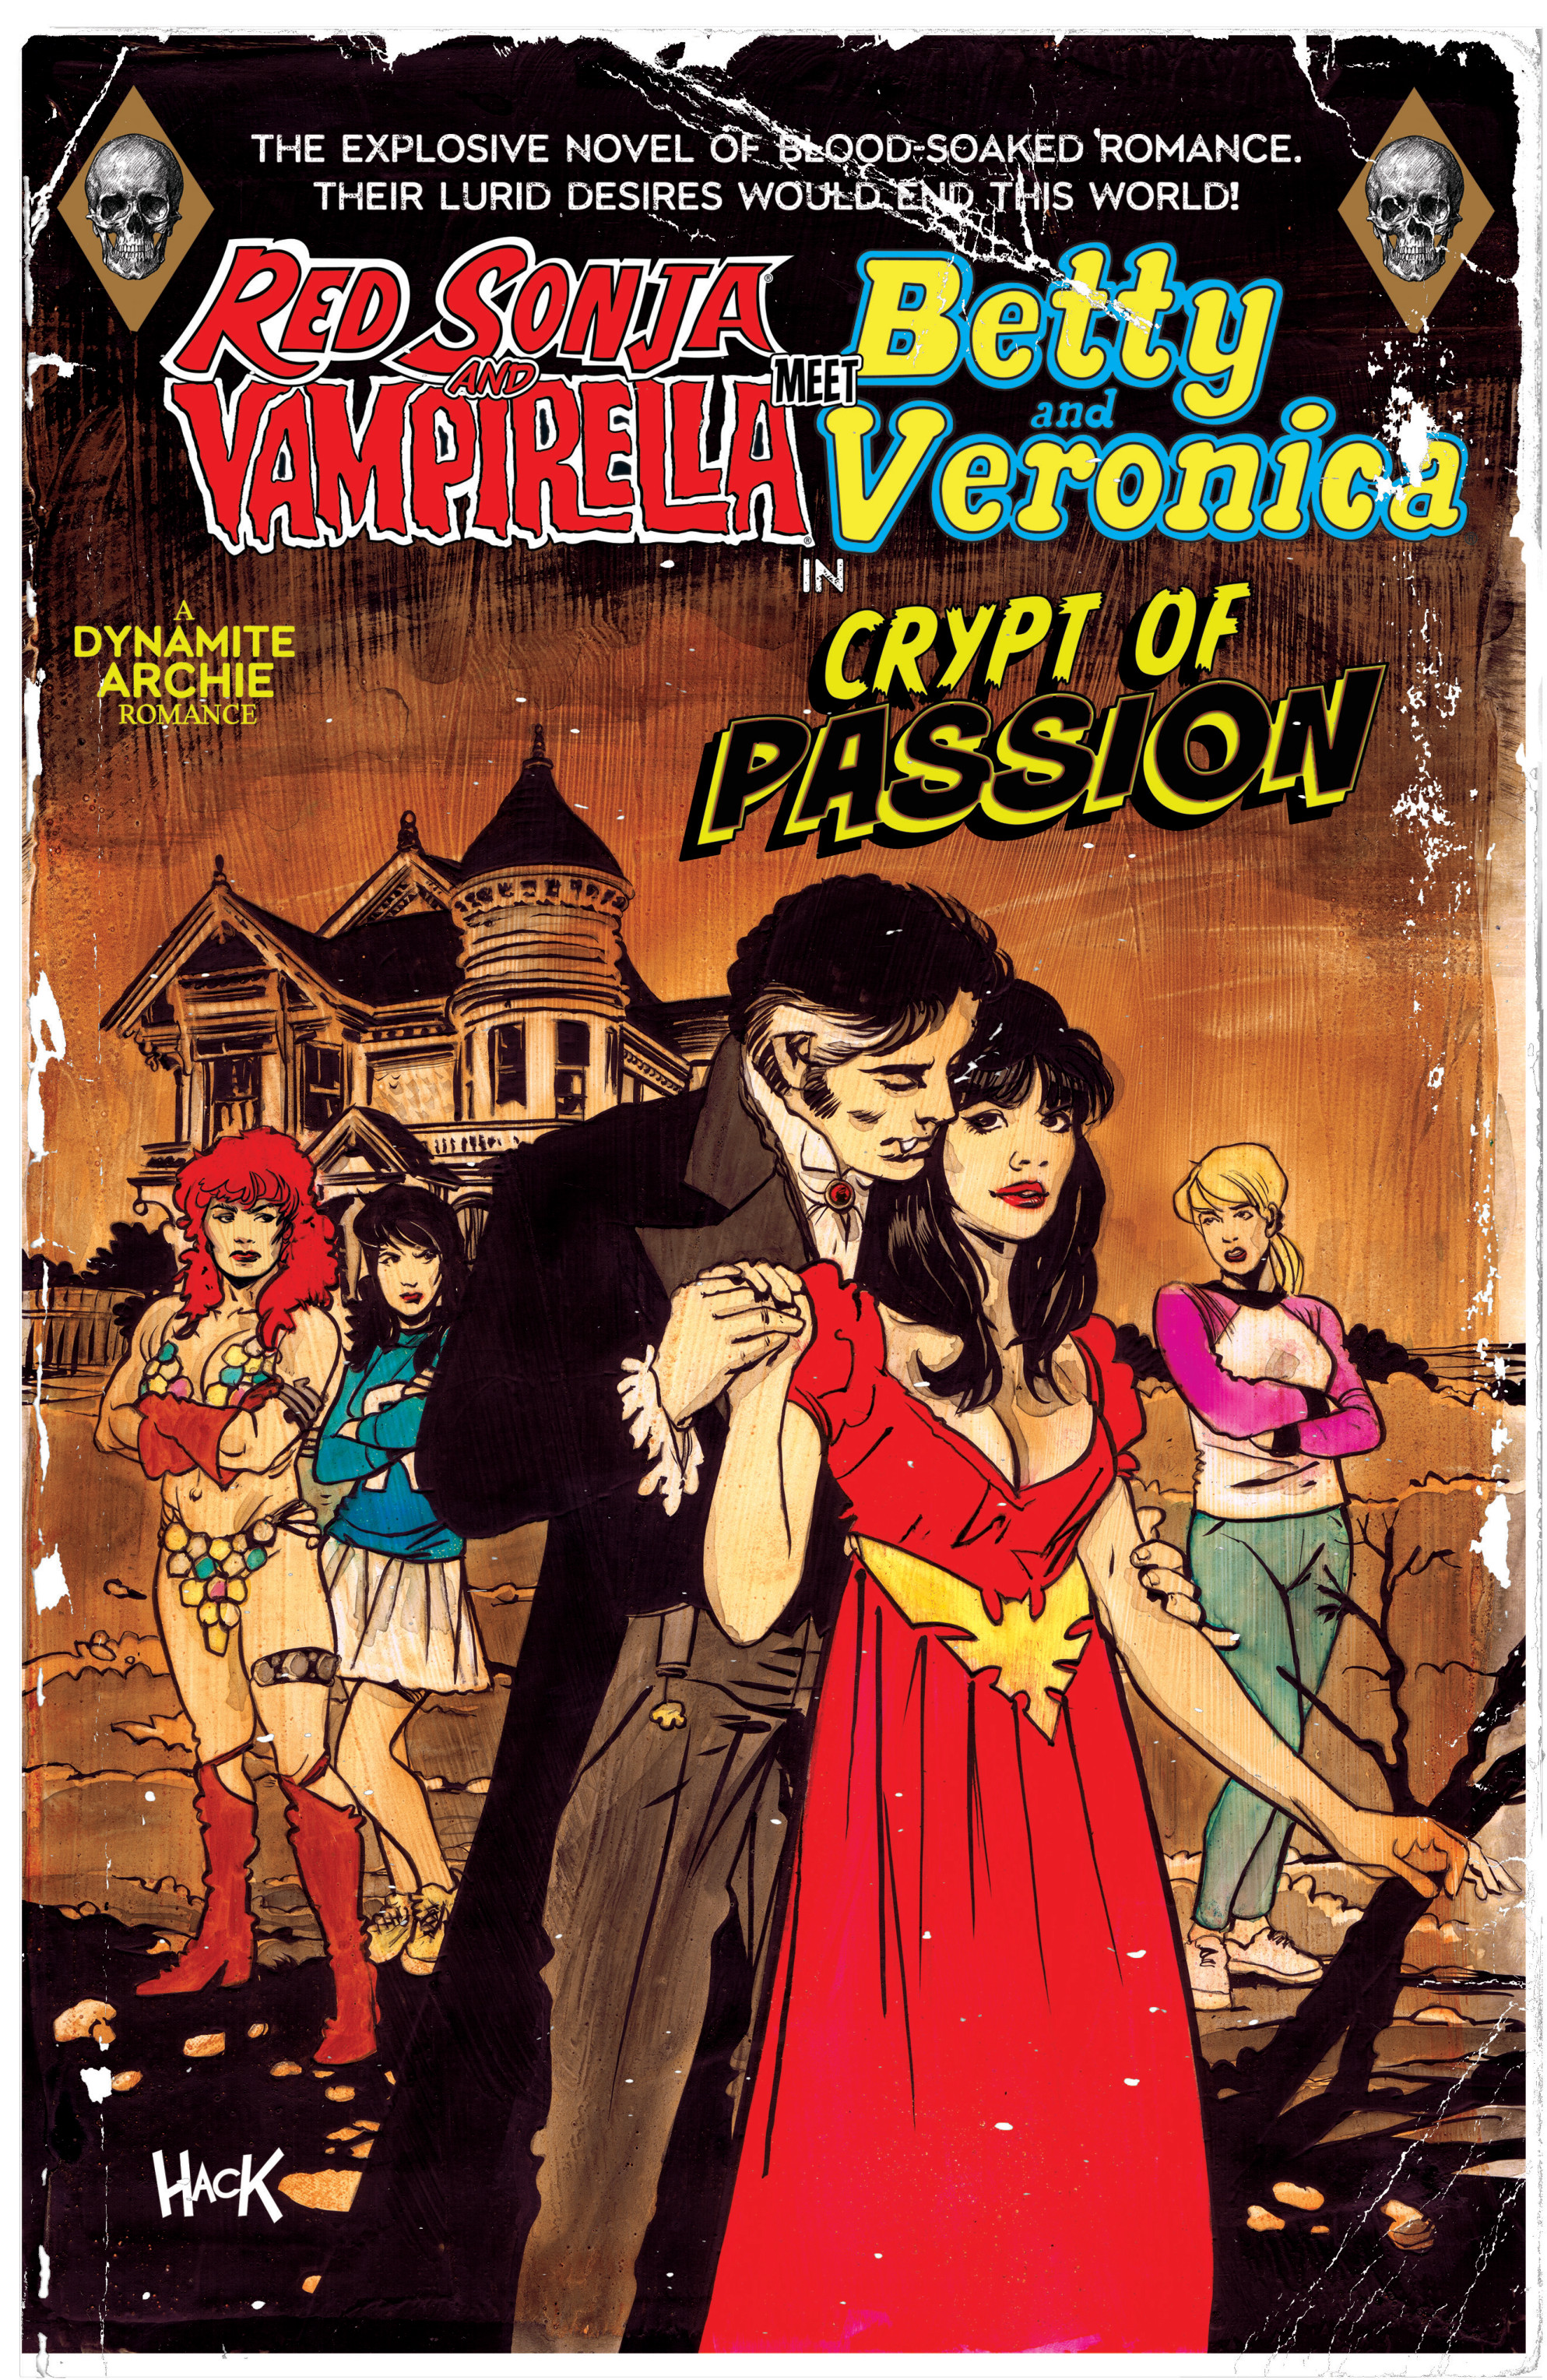 Red Sonja & Vampirella Meet Betty & Veronica (2019-): Chapter 9 - Page 2